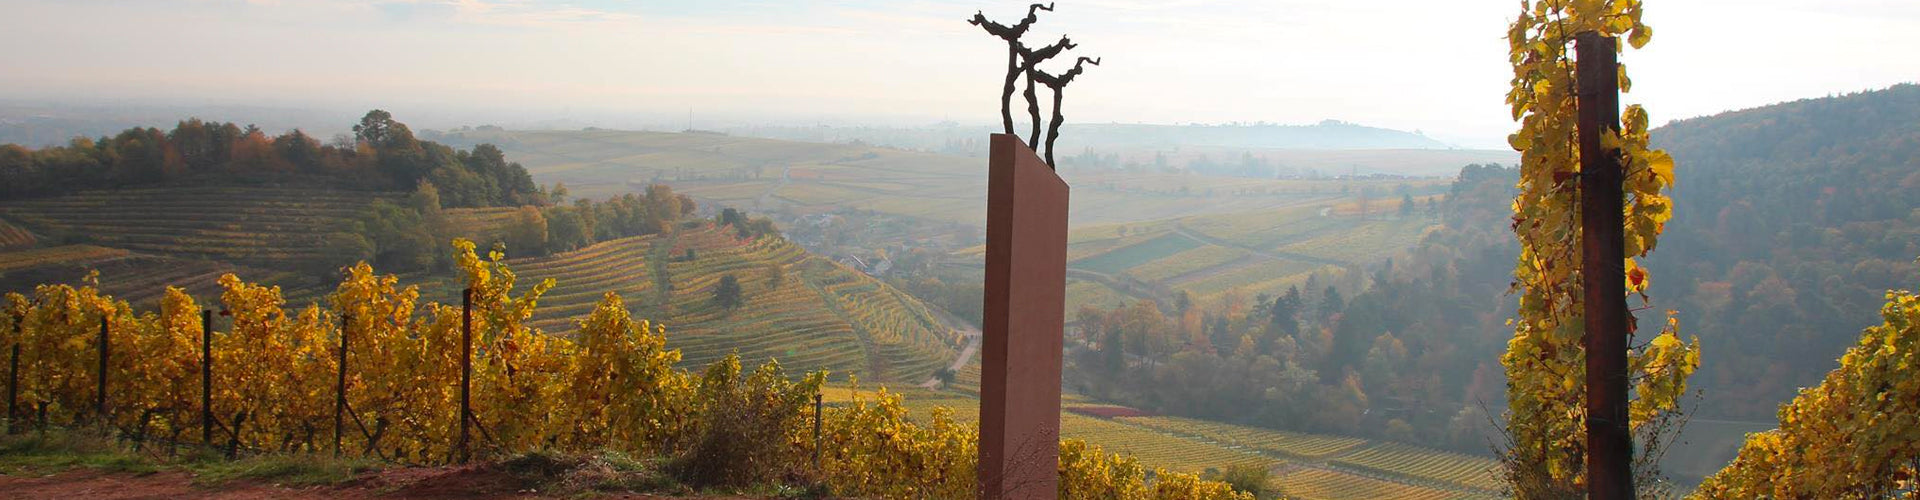 A view over the Pfalz from Ökonomierat Rebholz Vineyards